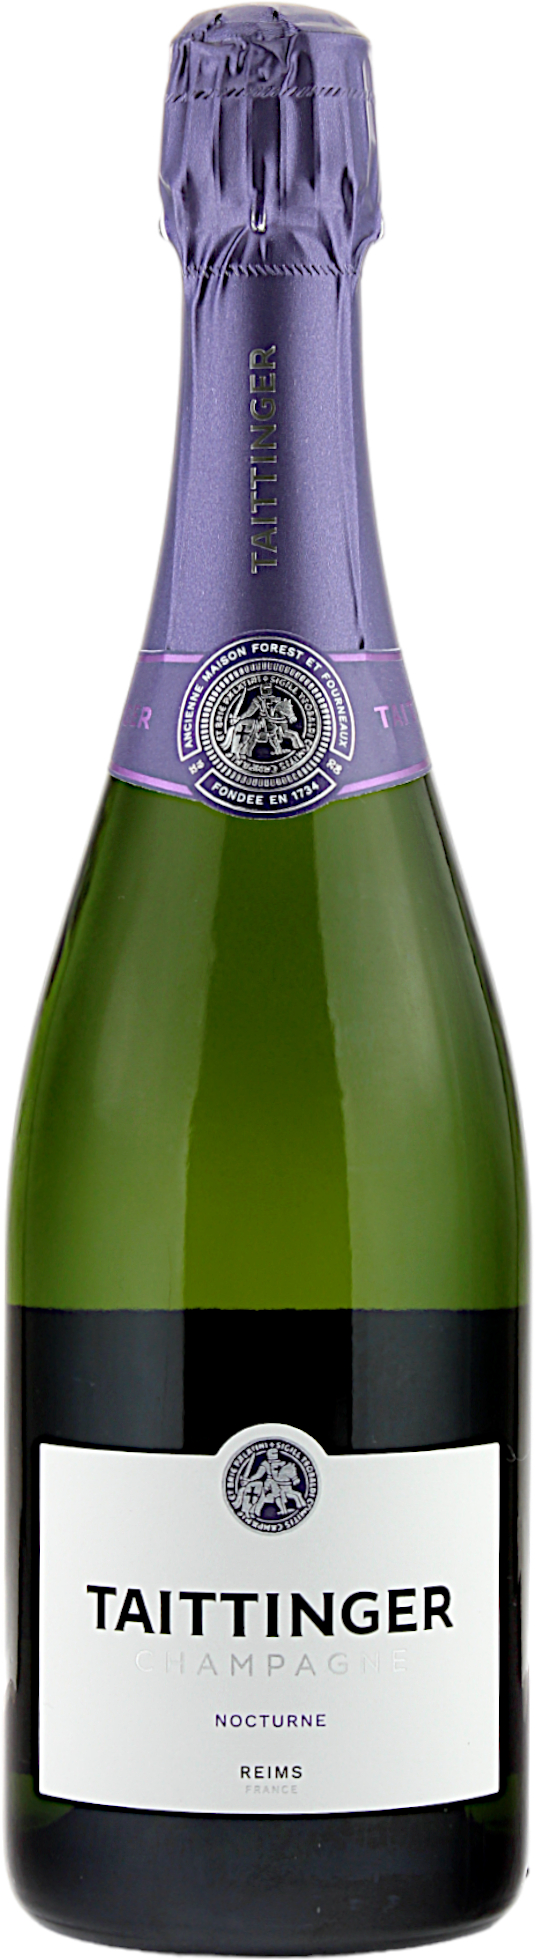 Champagne Taittinger Nocturne Sec 12.5% 0,75l